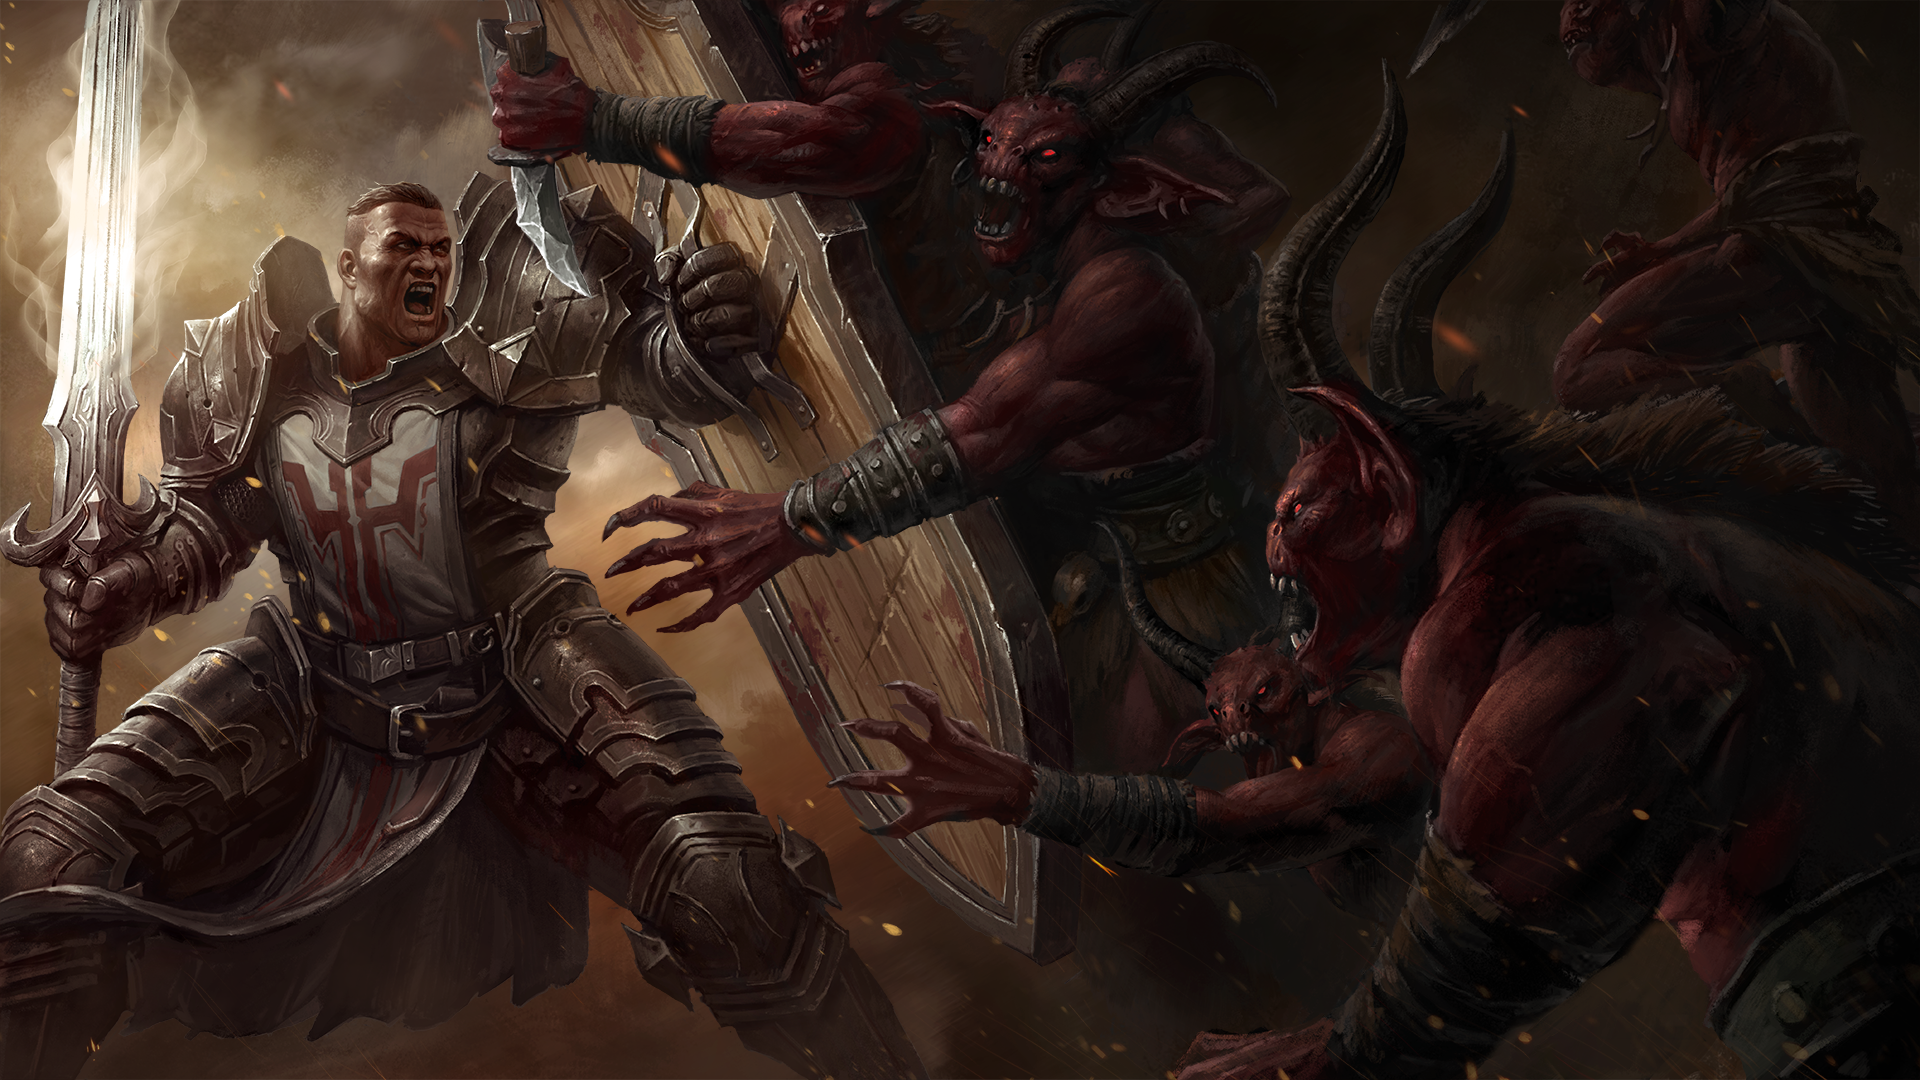 Diablo Immortal Season 2 Patch (Full Details) - HellHades